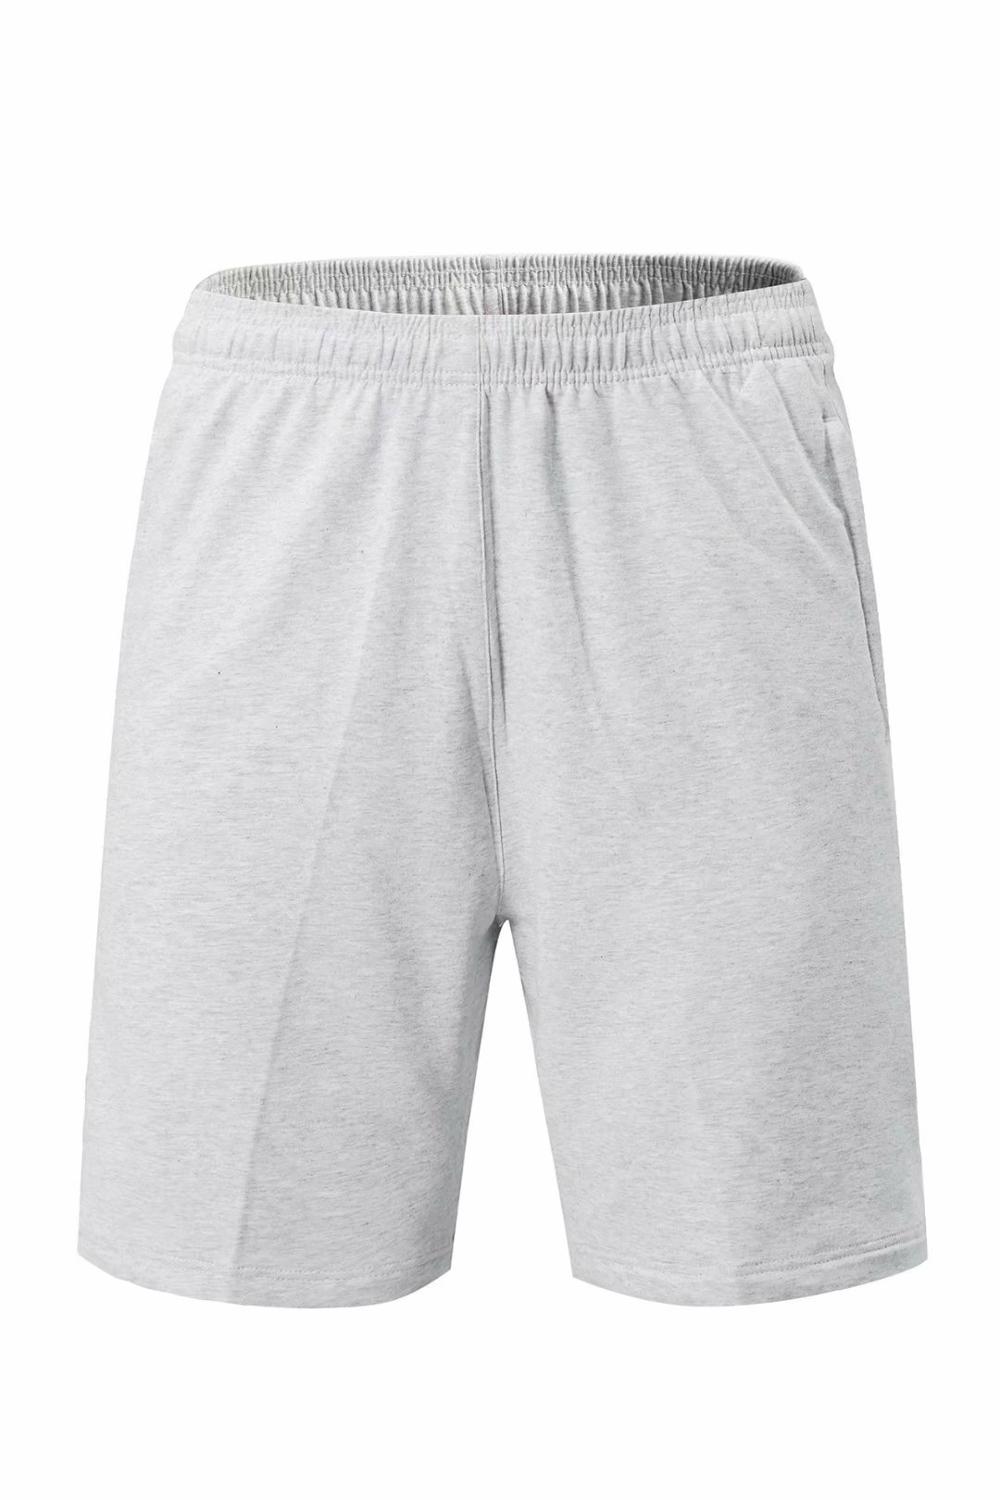 Badminton shorts grå sportsbeklædning med lommer mænd badminton shorts lynlås bomuld mand sports shorts  #792350